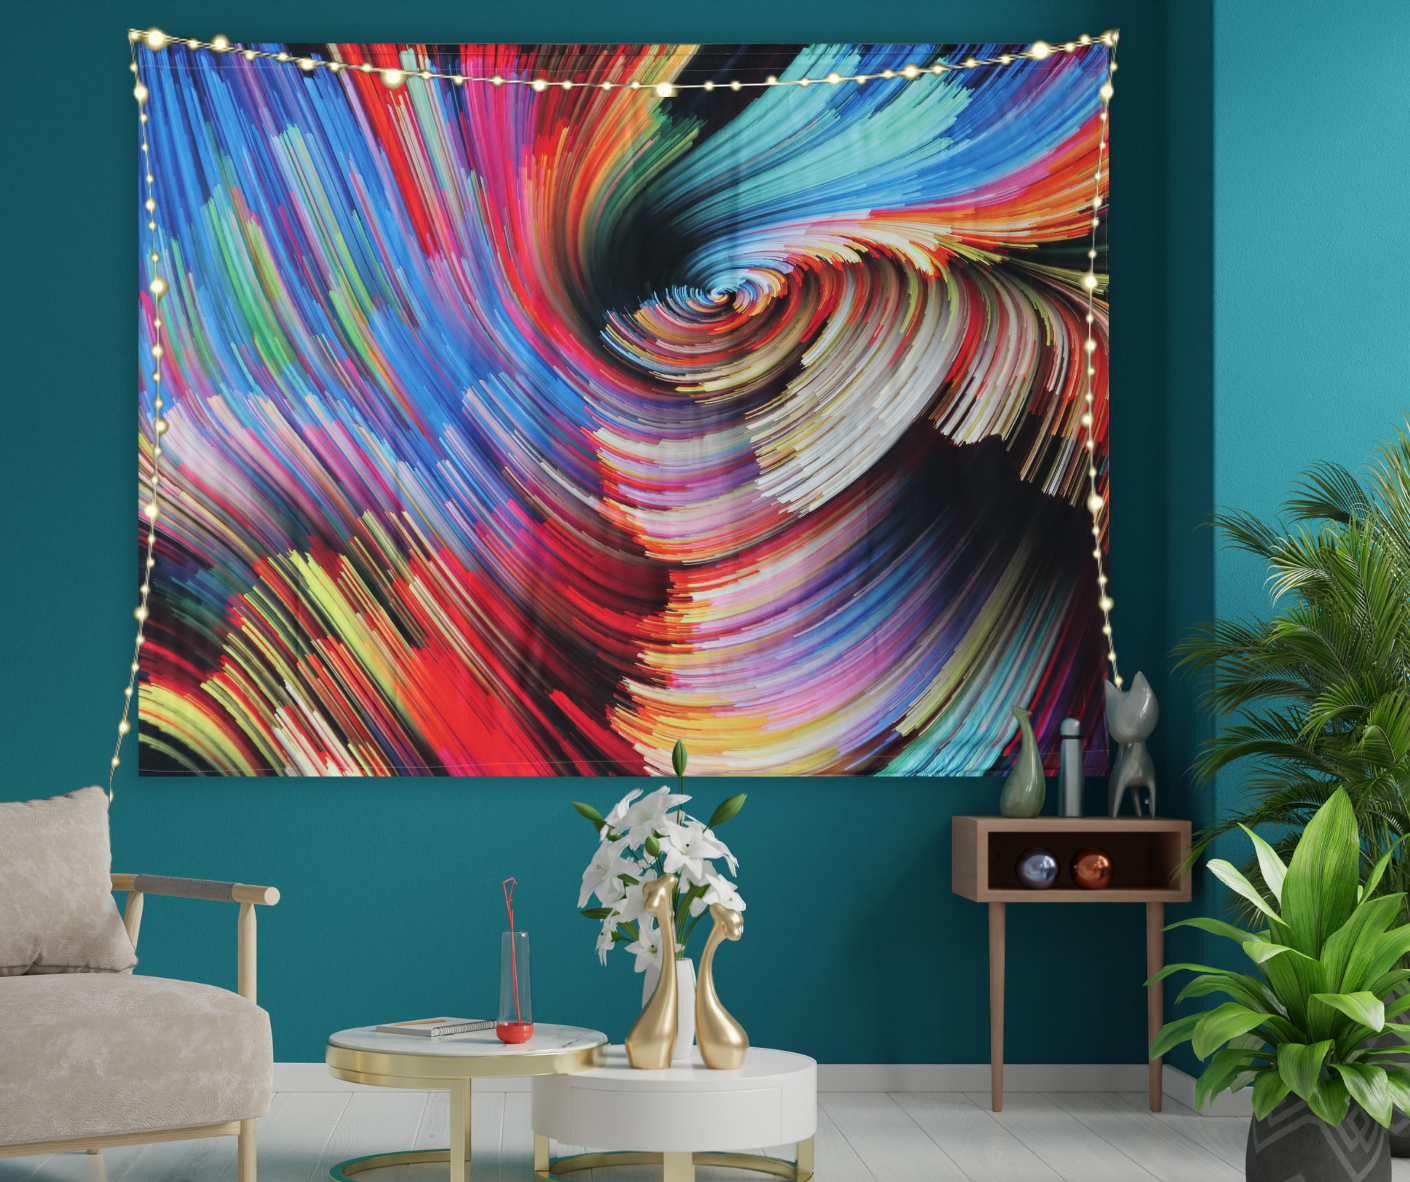 KaiSha LED Tapestry Wall Hanging; Abstract Modern Mandala Art Home Décor Living Room Bedroom Dorm Large Wave Artwork (79"x59")